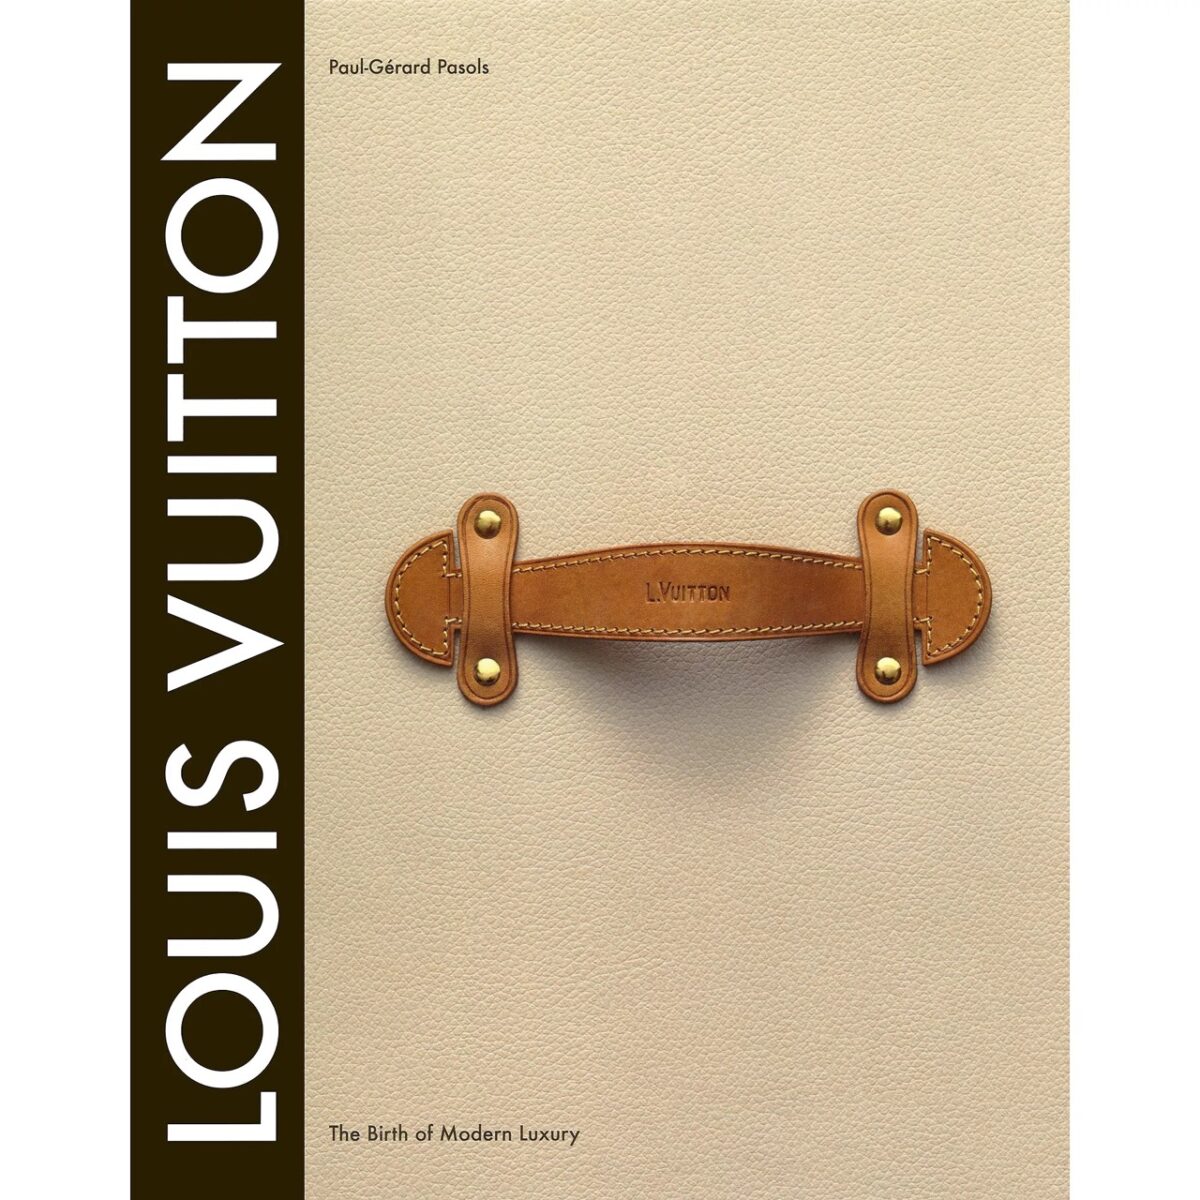 LOUIS VUITTON Hachette Book The Birth of Modern Luxury Large